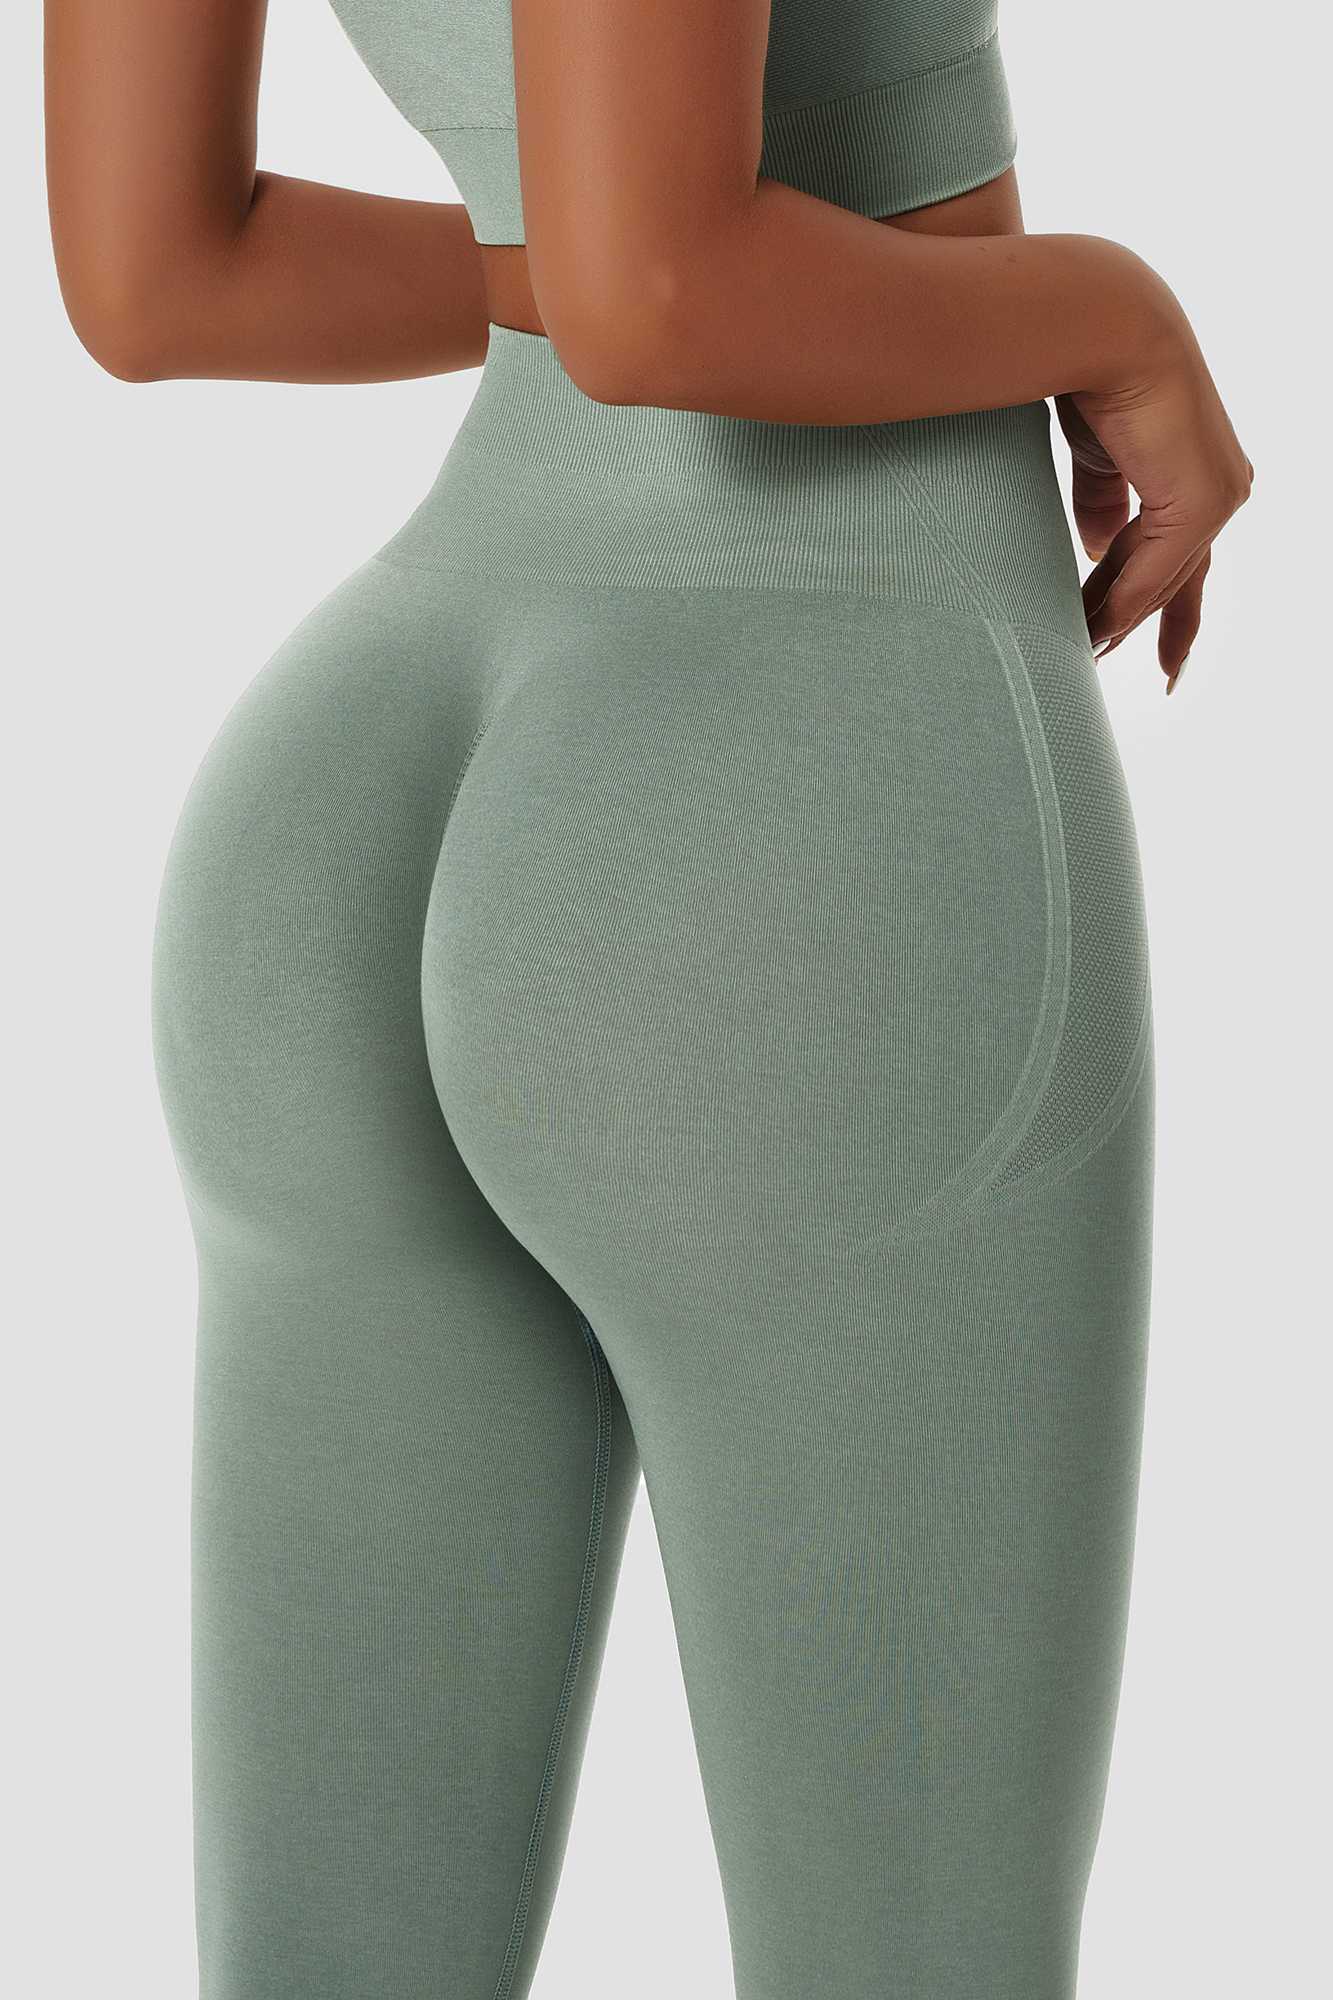 QRIC Yoga Pants for Women Scrunch Butt Lifting Workout Leggings for Women  Tummy Control High Waisted Yoga Pants - Tik Tok Textured Slimming Leggings  